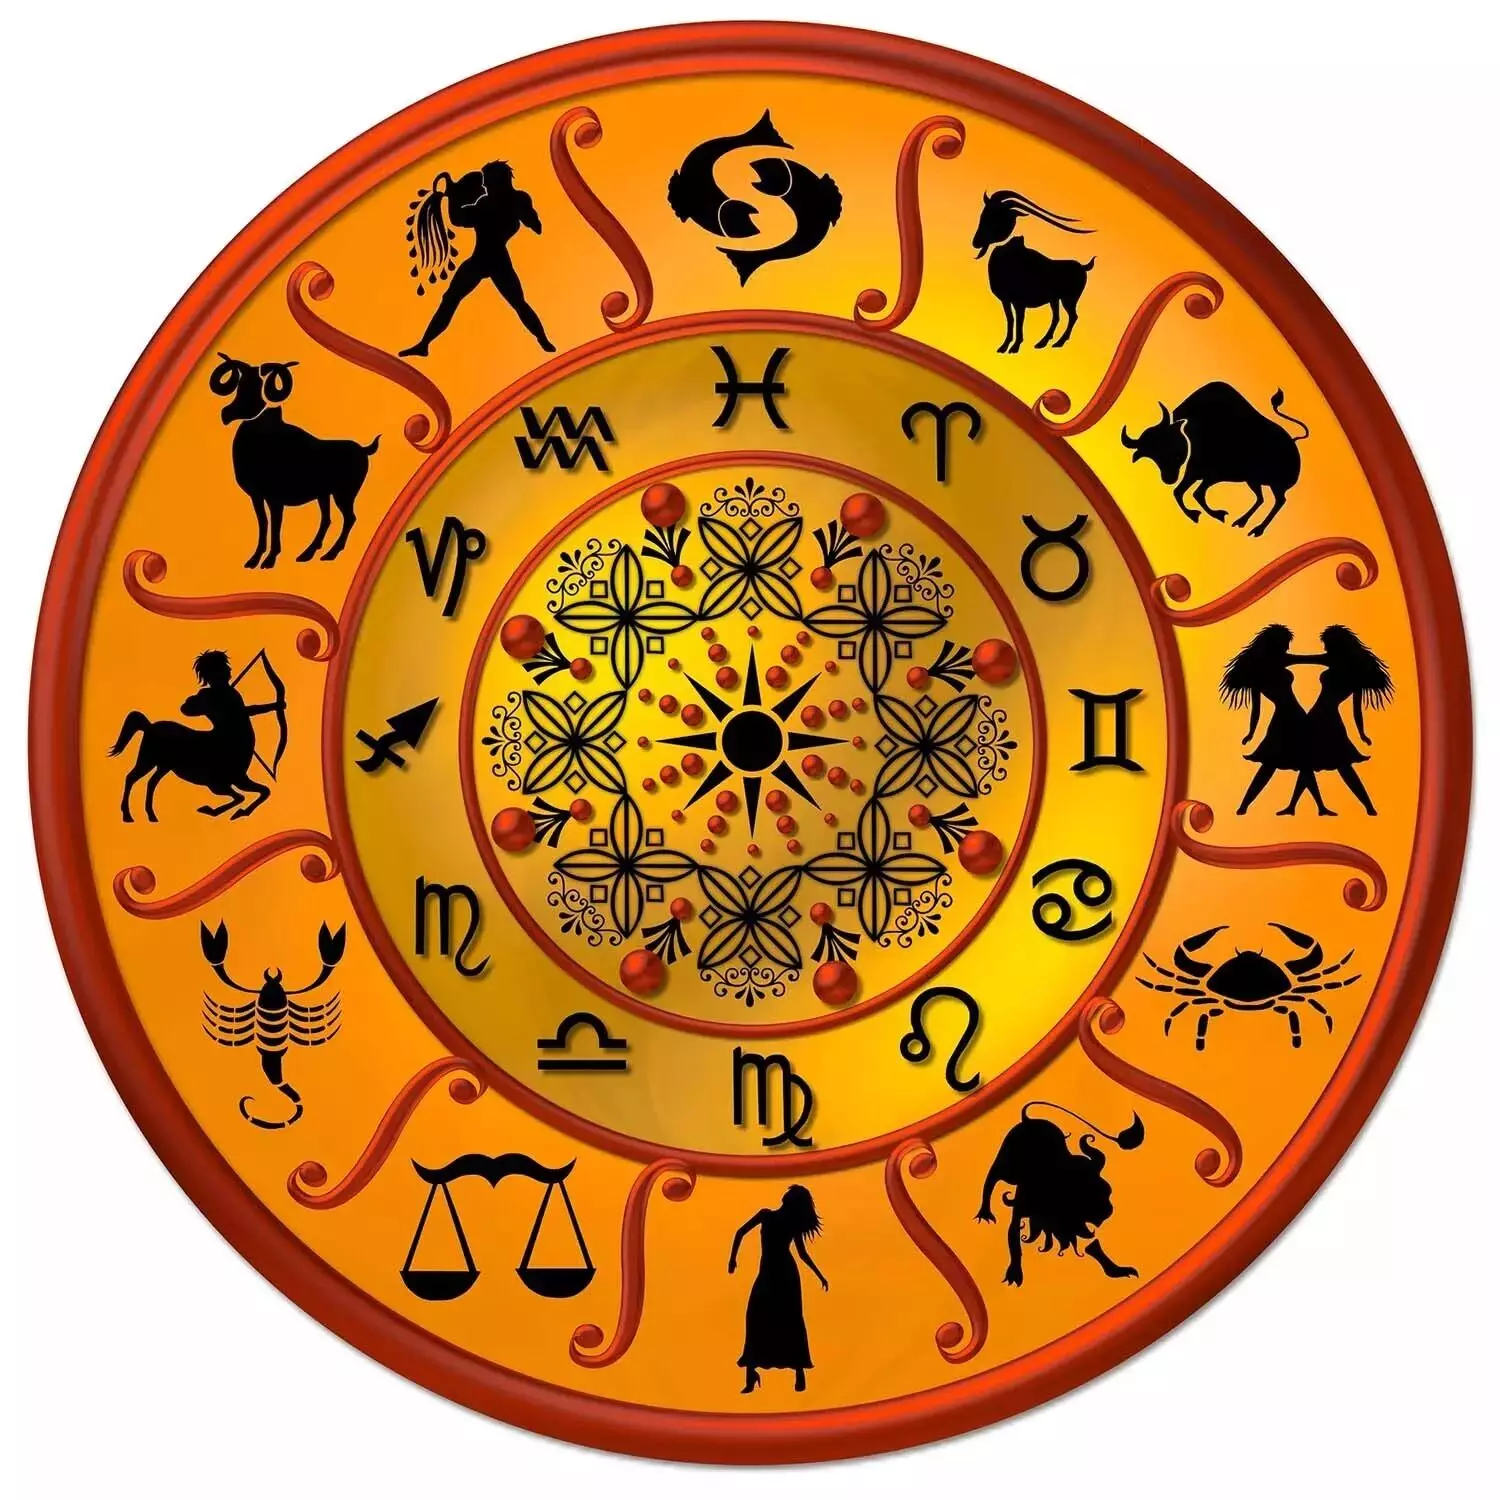 06  Novembar  – Know your todays horoscope